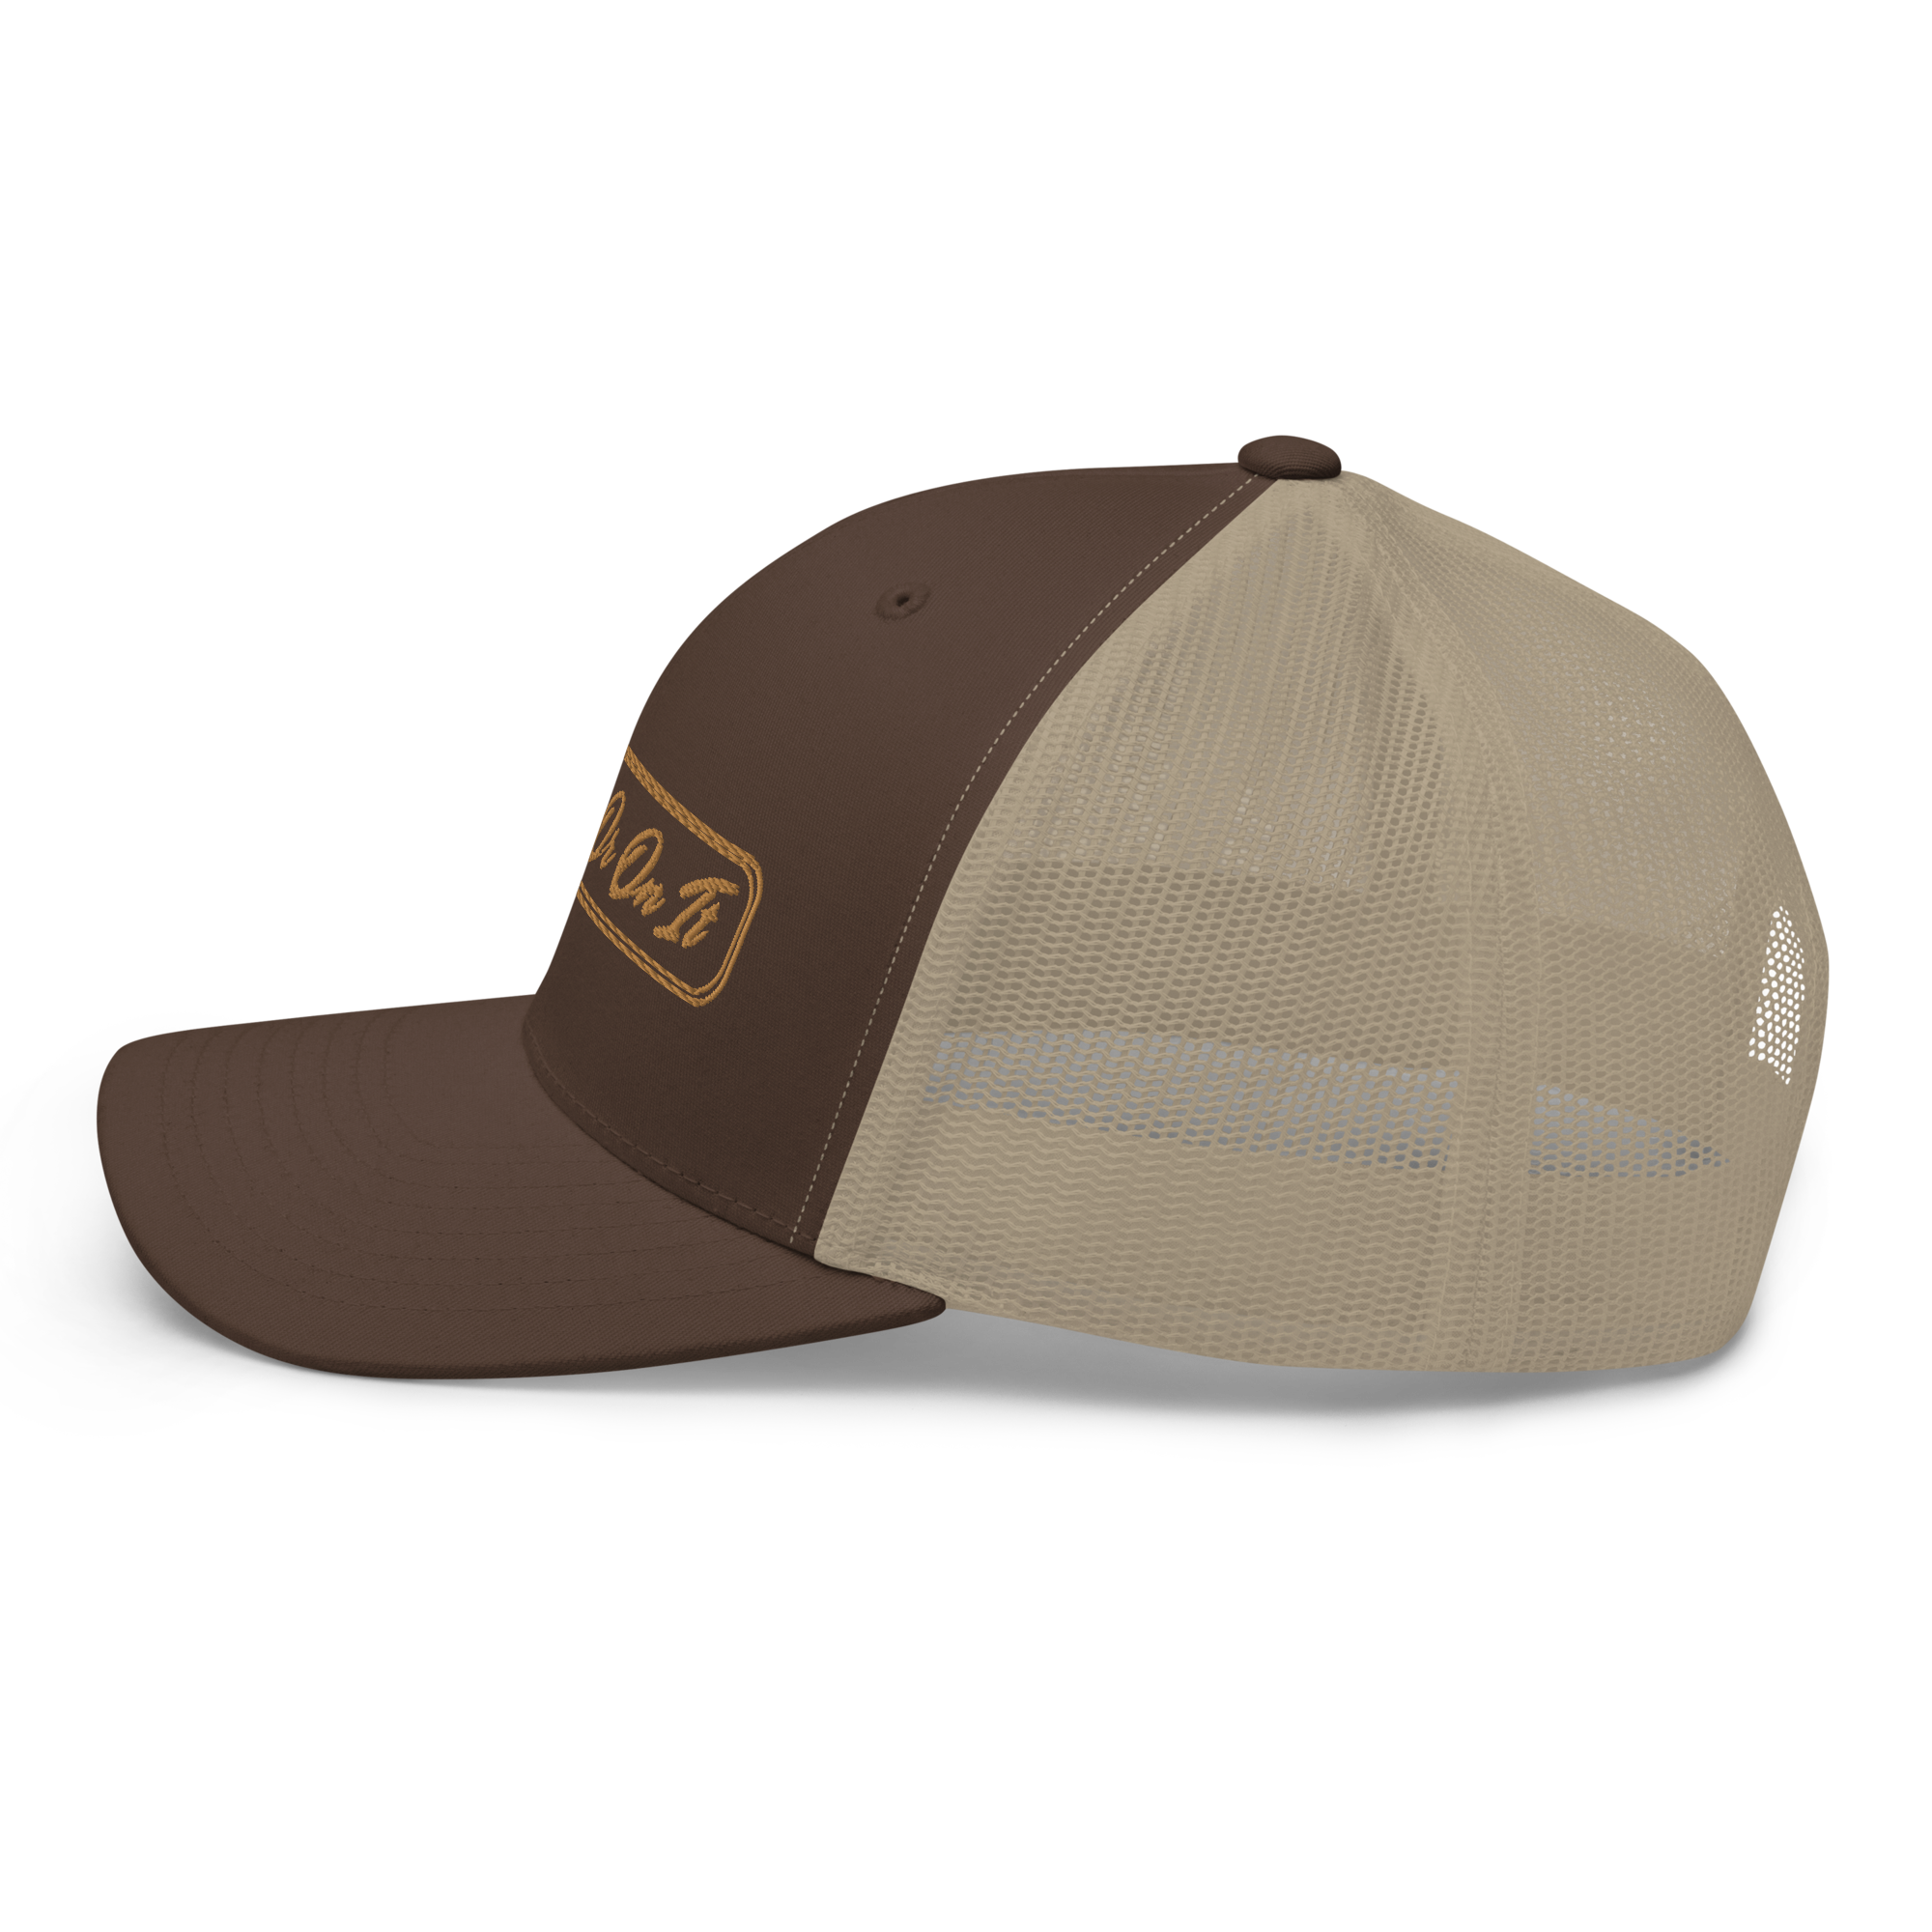 Original Trucker Hat - Brown/Tan/Gold